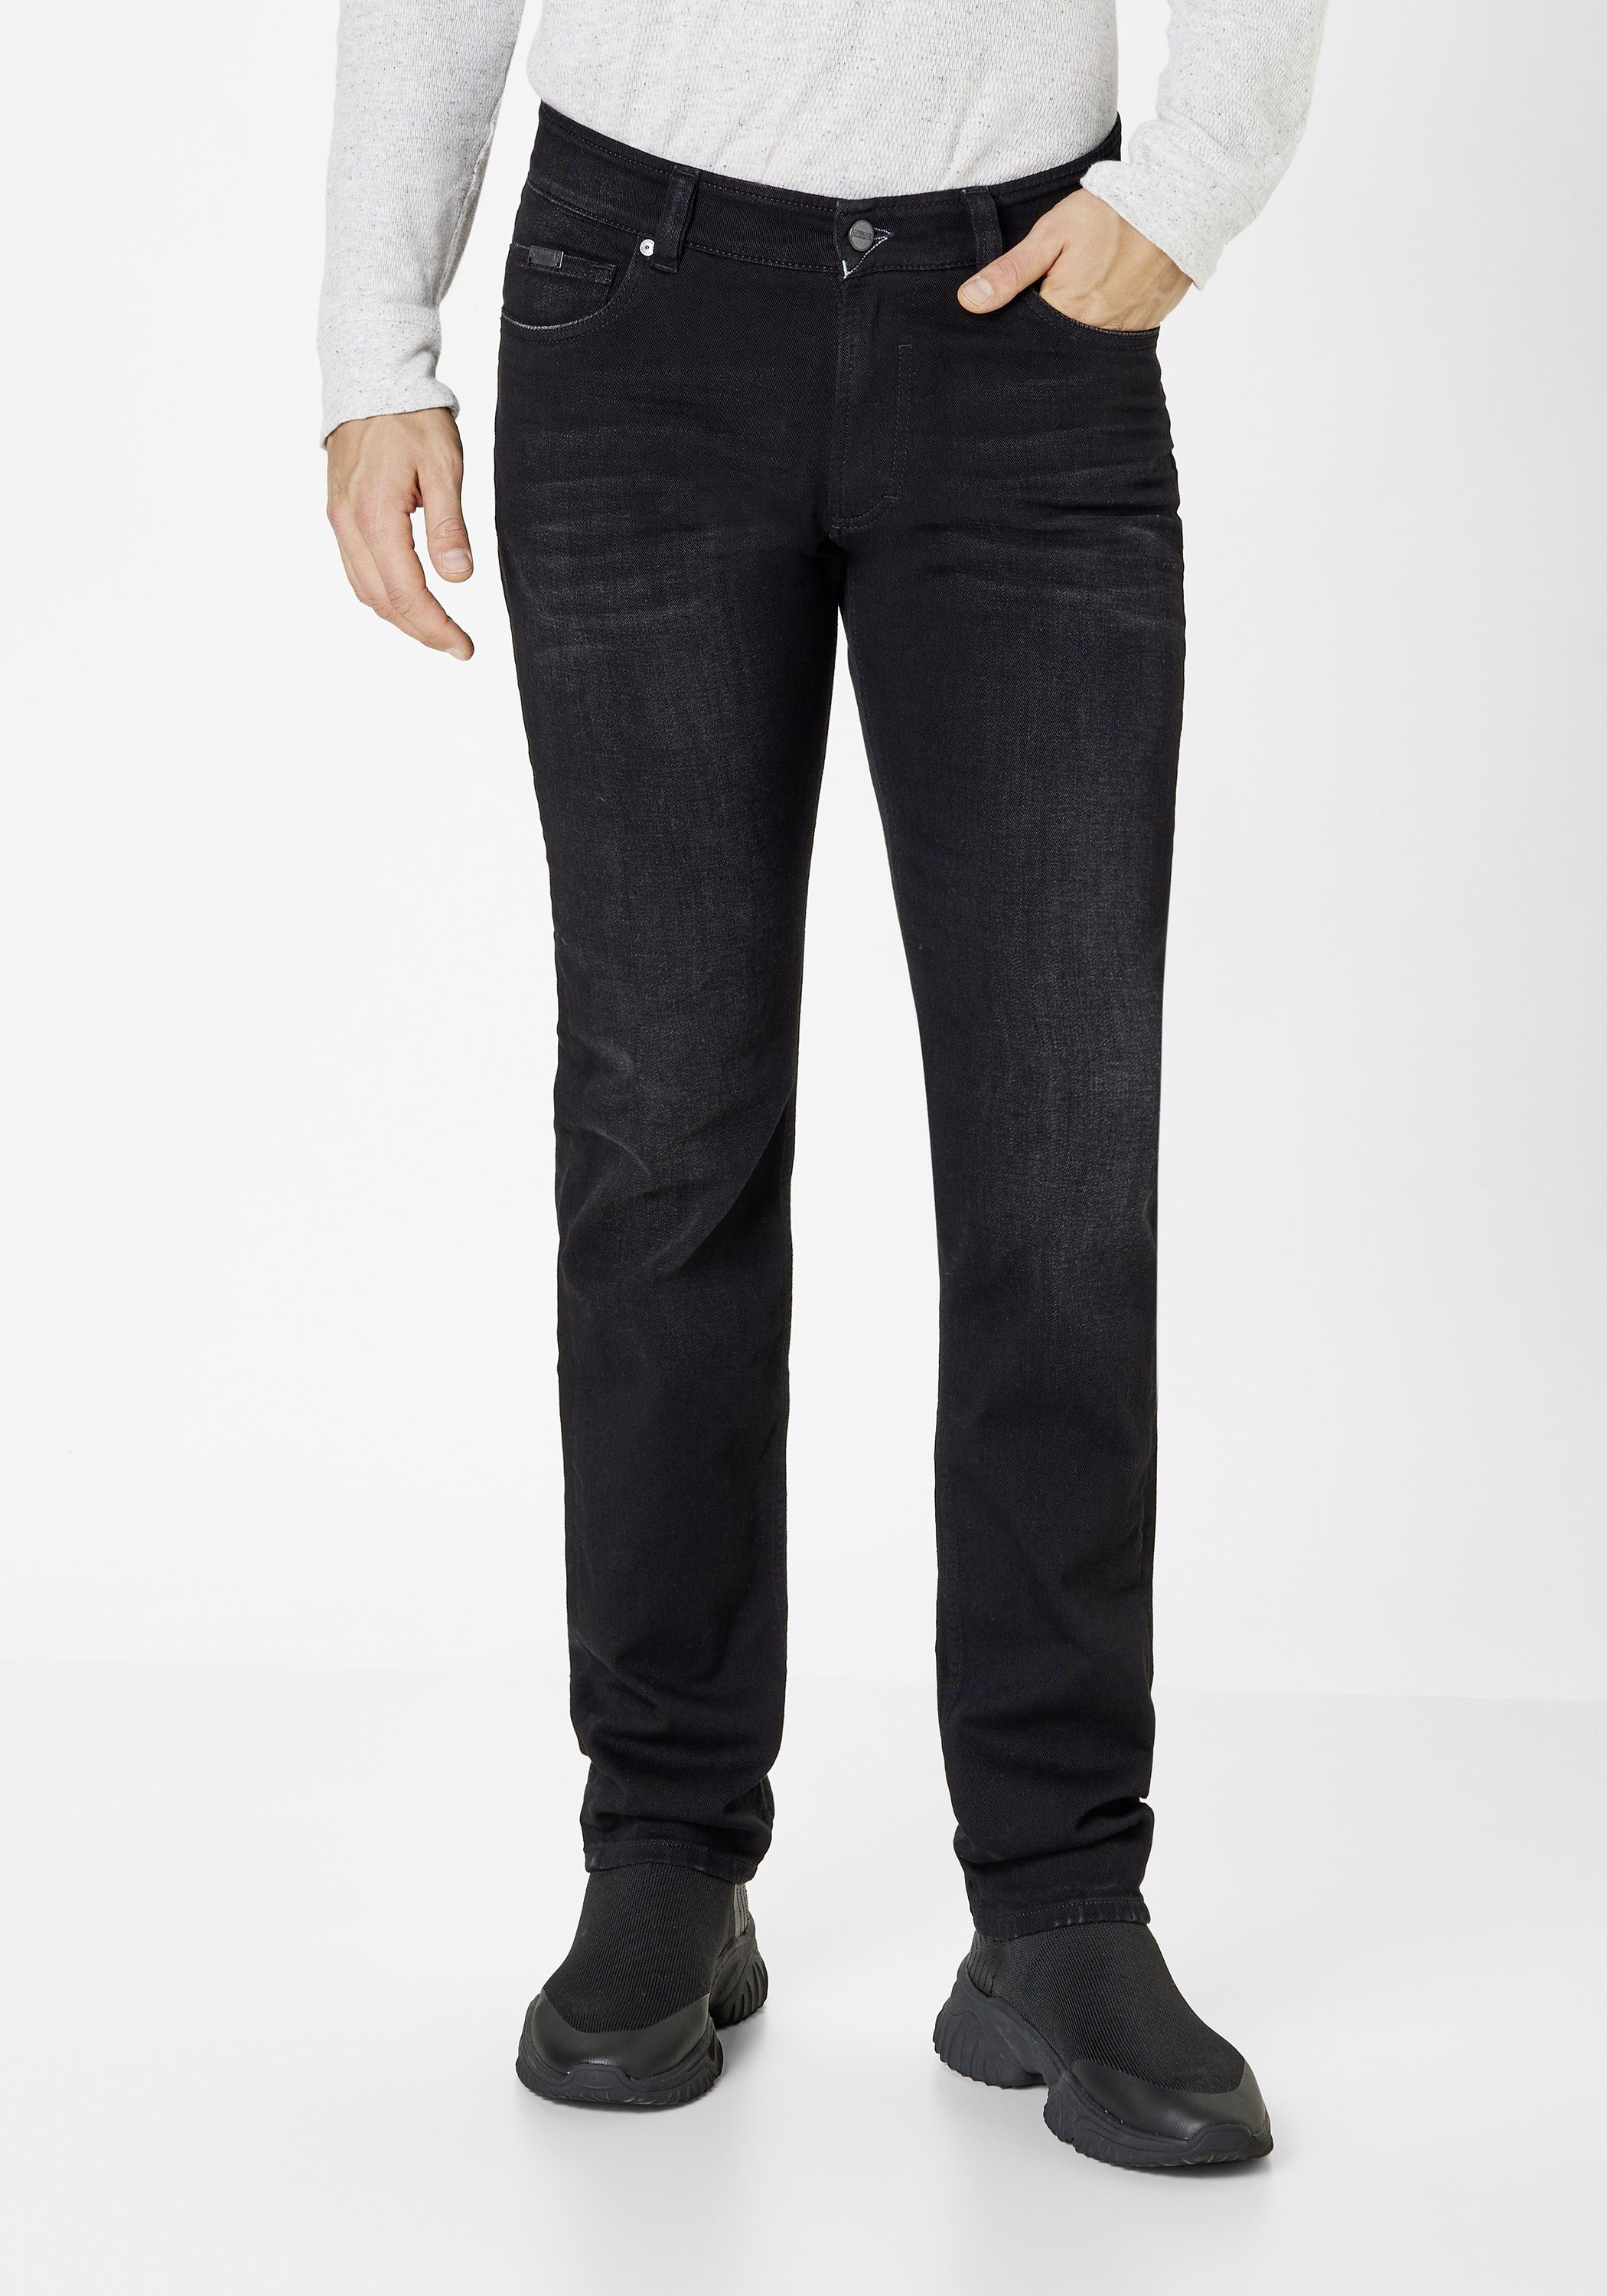 Paddock's 5-Pocket-Jeans DUKE Superior black Straight-Fit moustache Jeans use